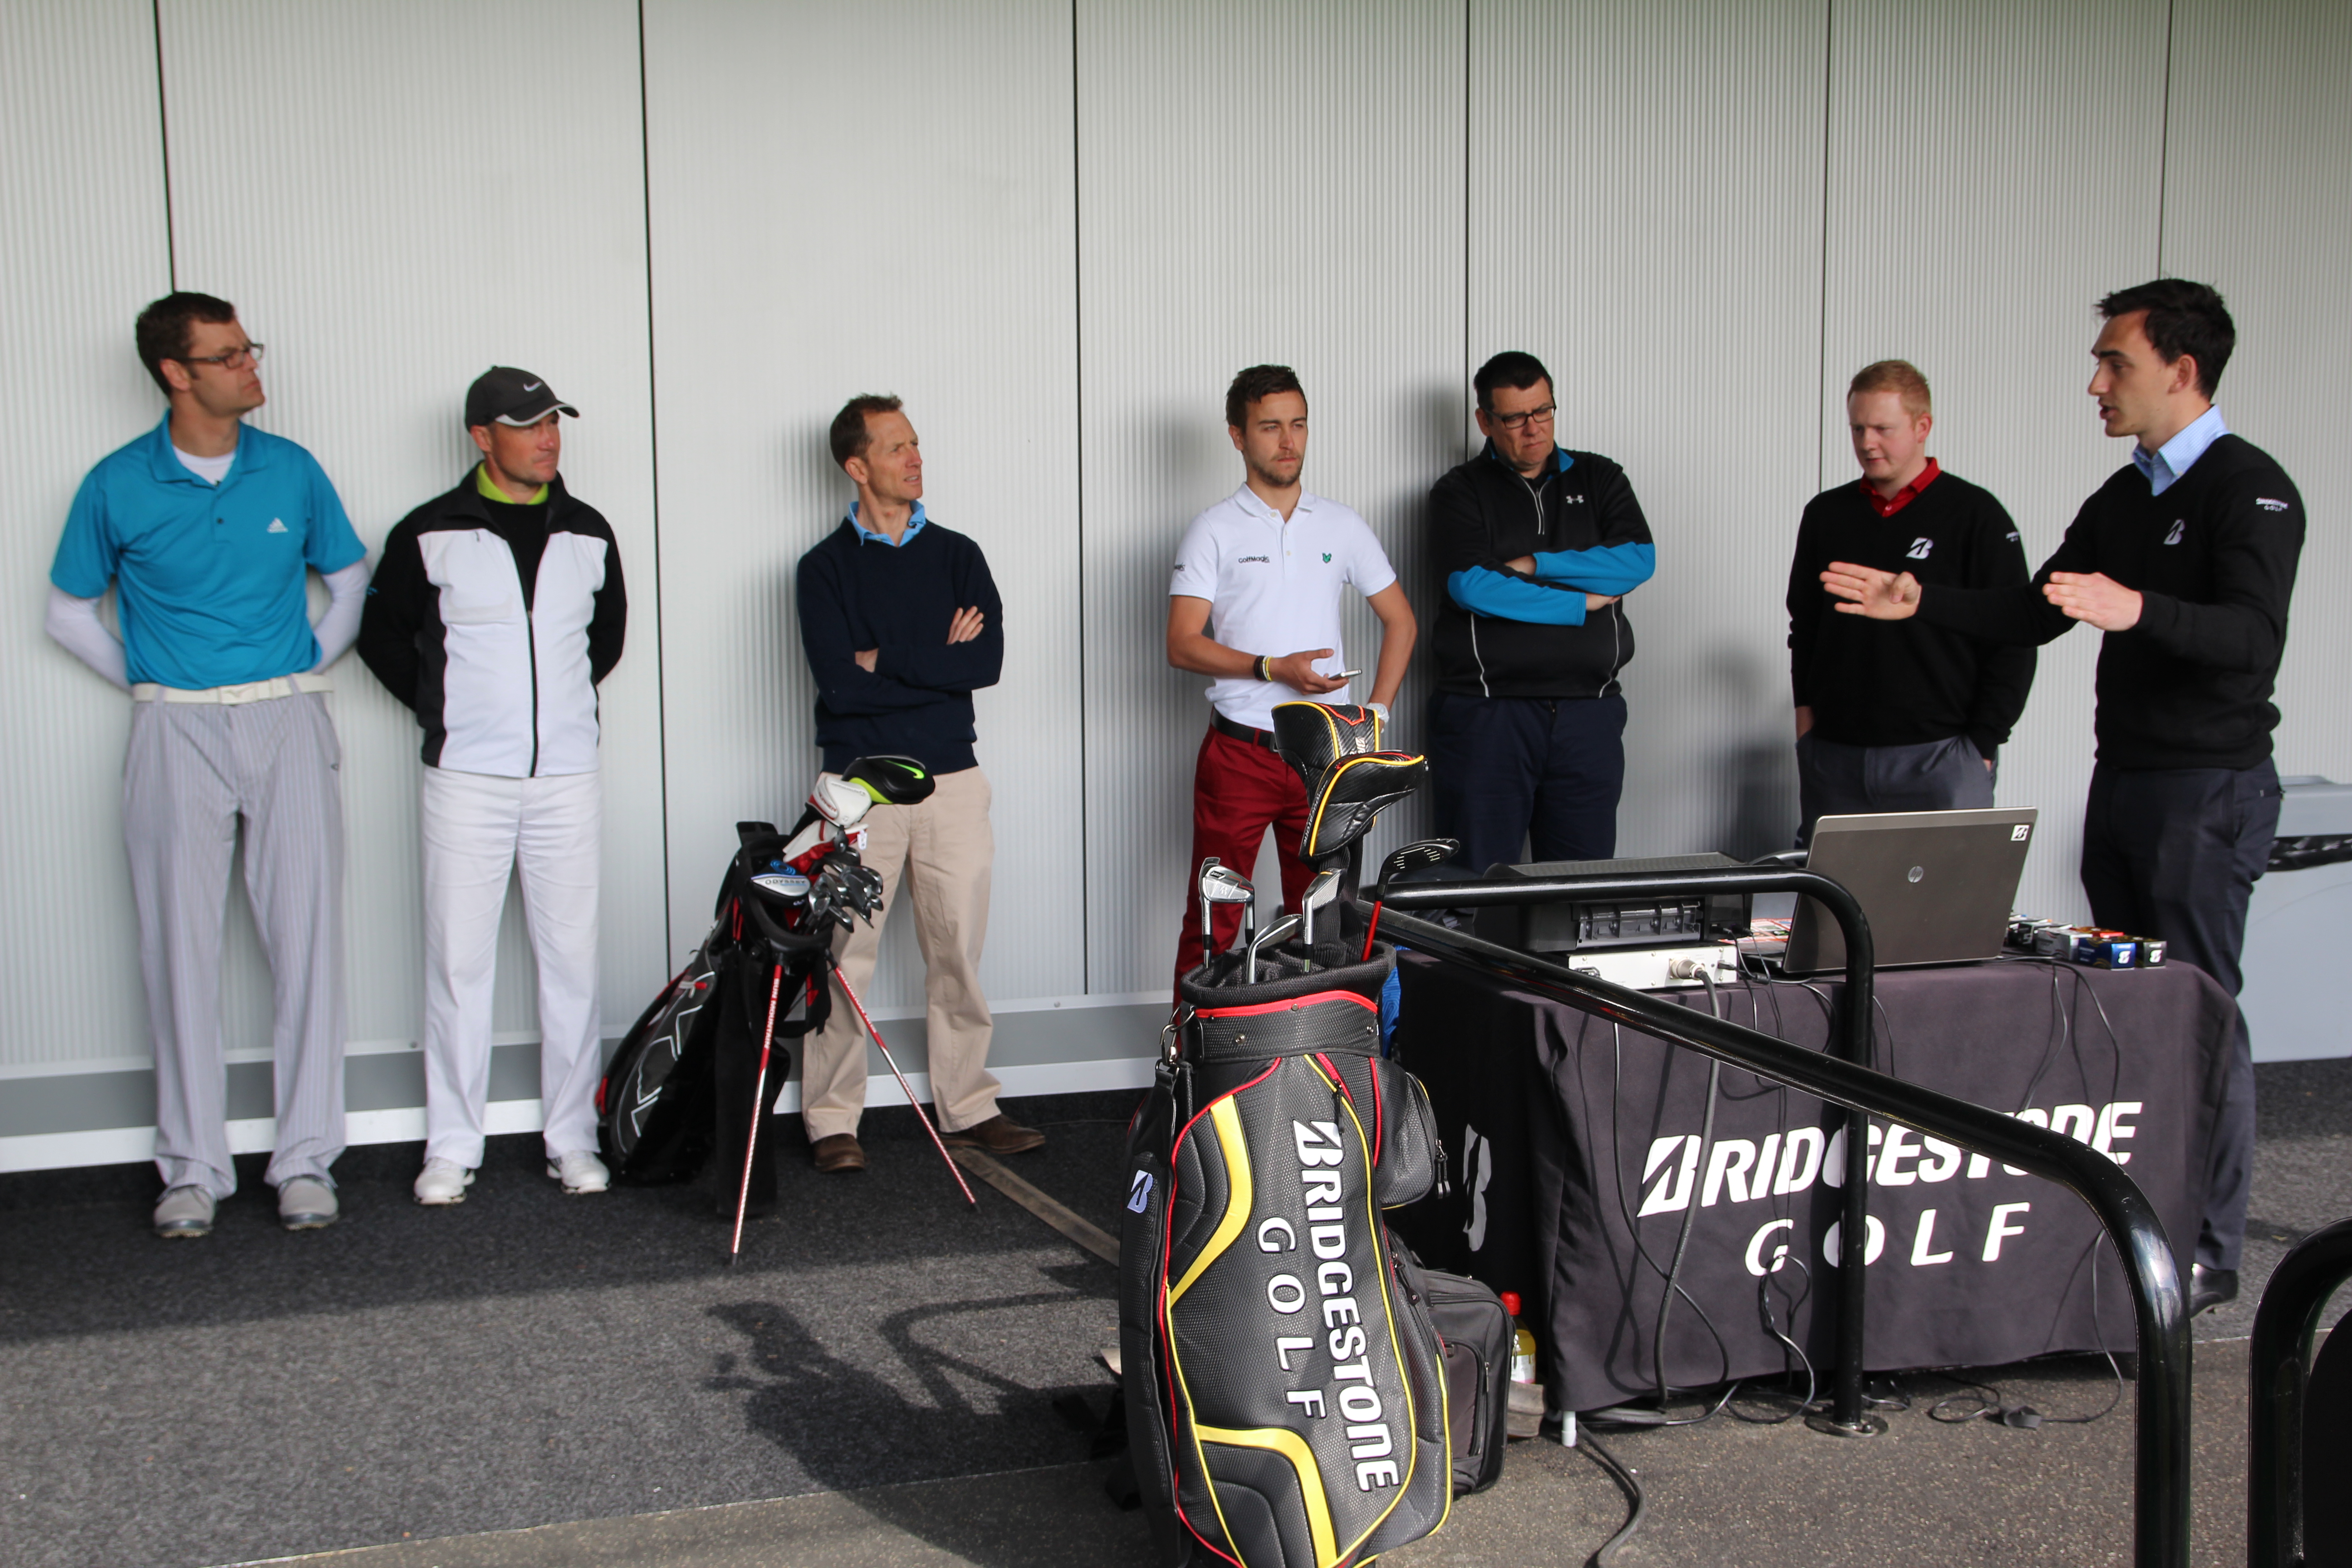 GolfMagic reader Tom Frogley (far left) listens attentively to Bridgestone's Danny Osborne